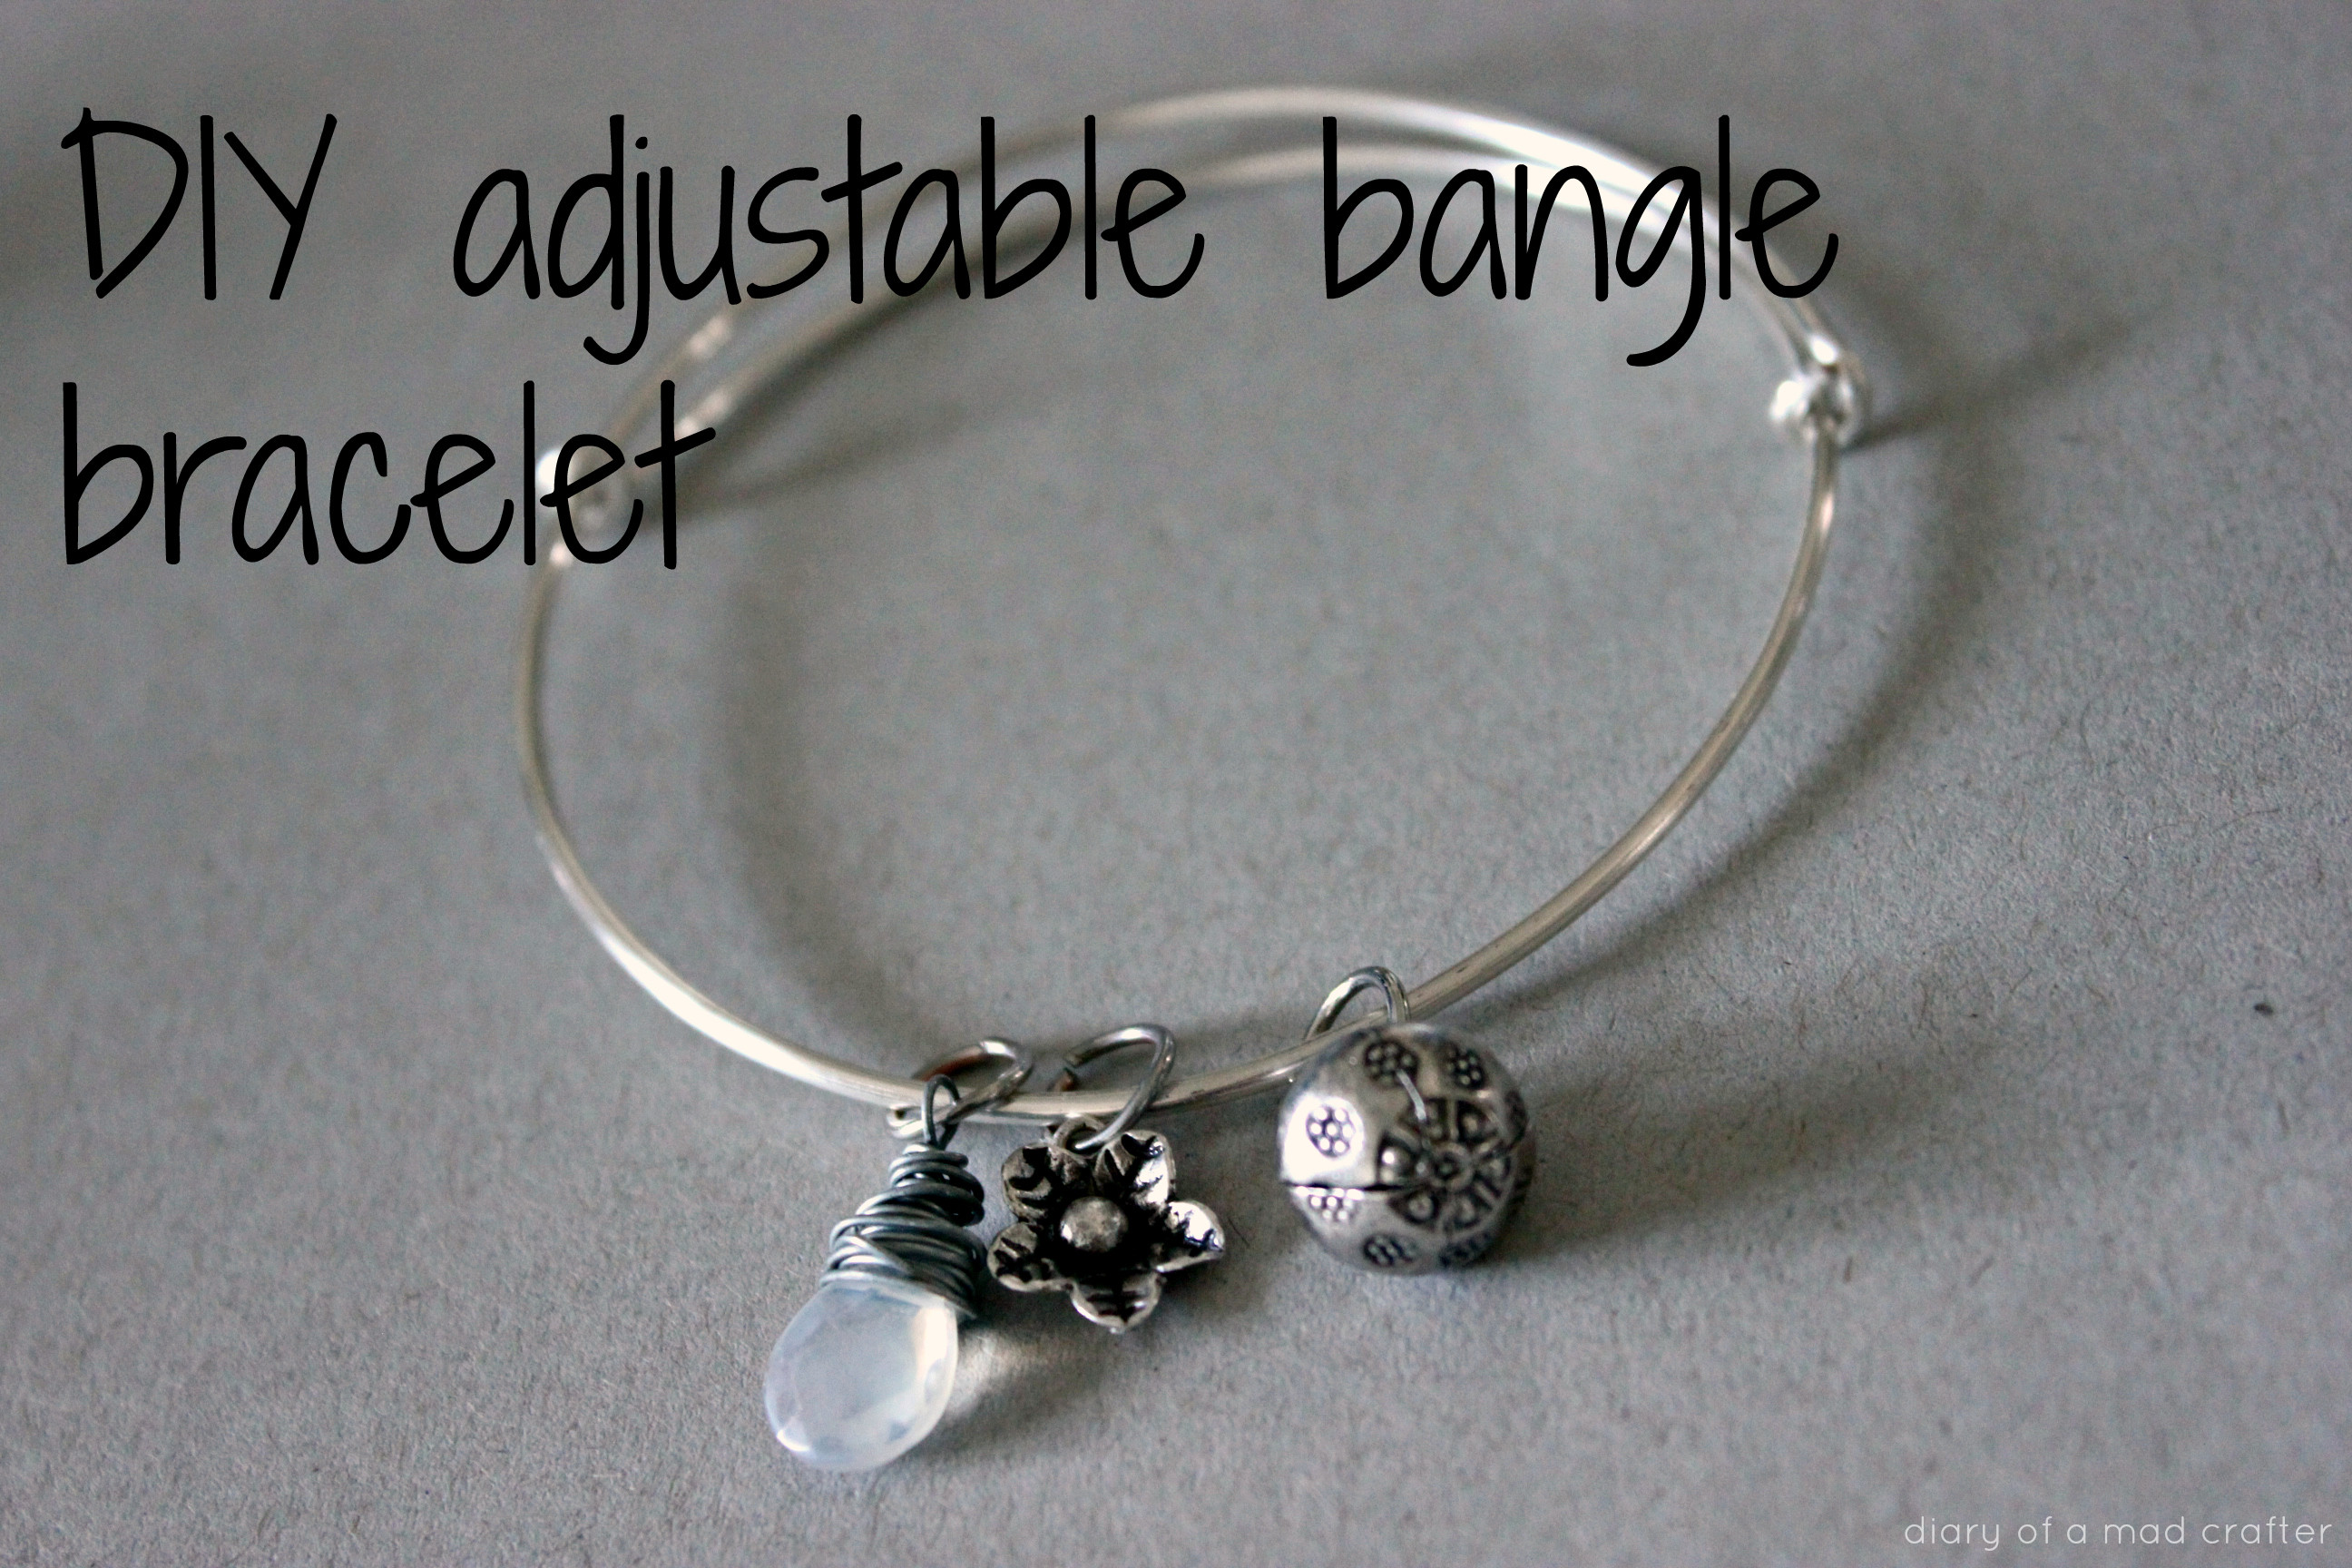 Best ideas about DIY Charms Bracelet
. Save or Pin DIY Adjustable Bangle Bracelet Now.